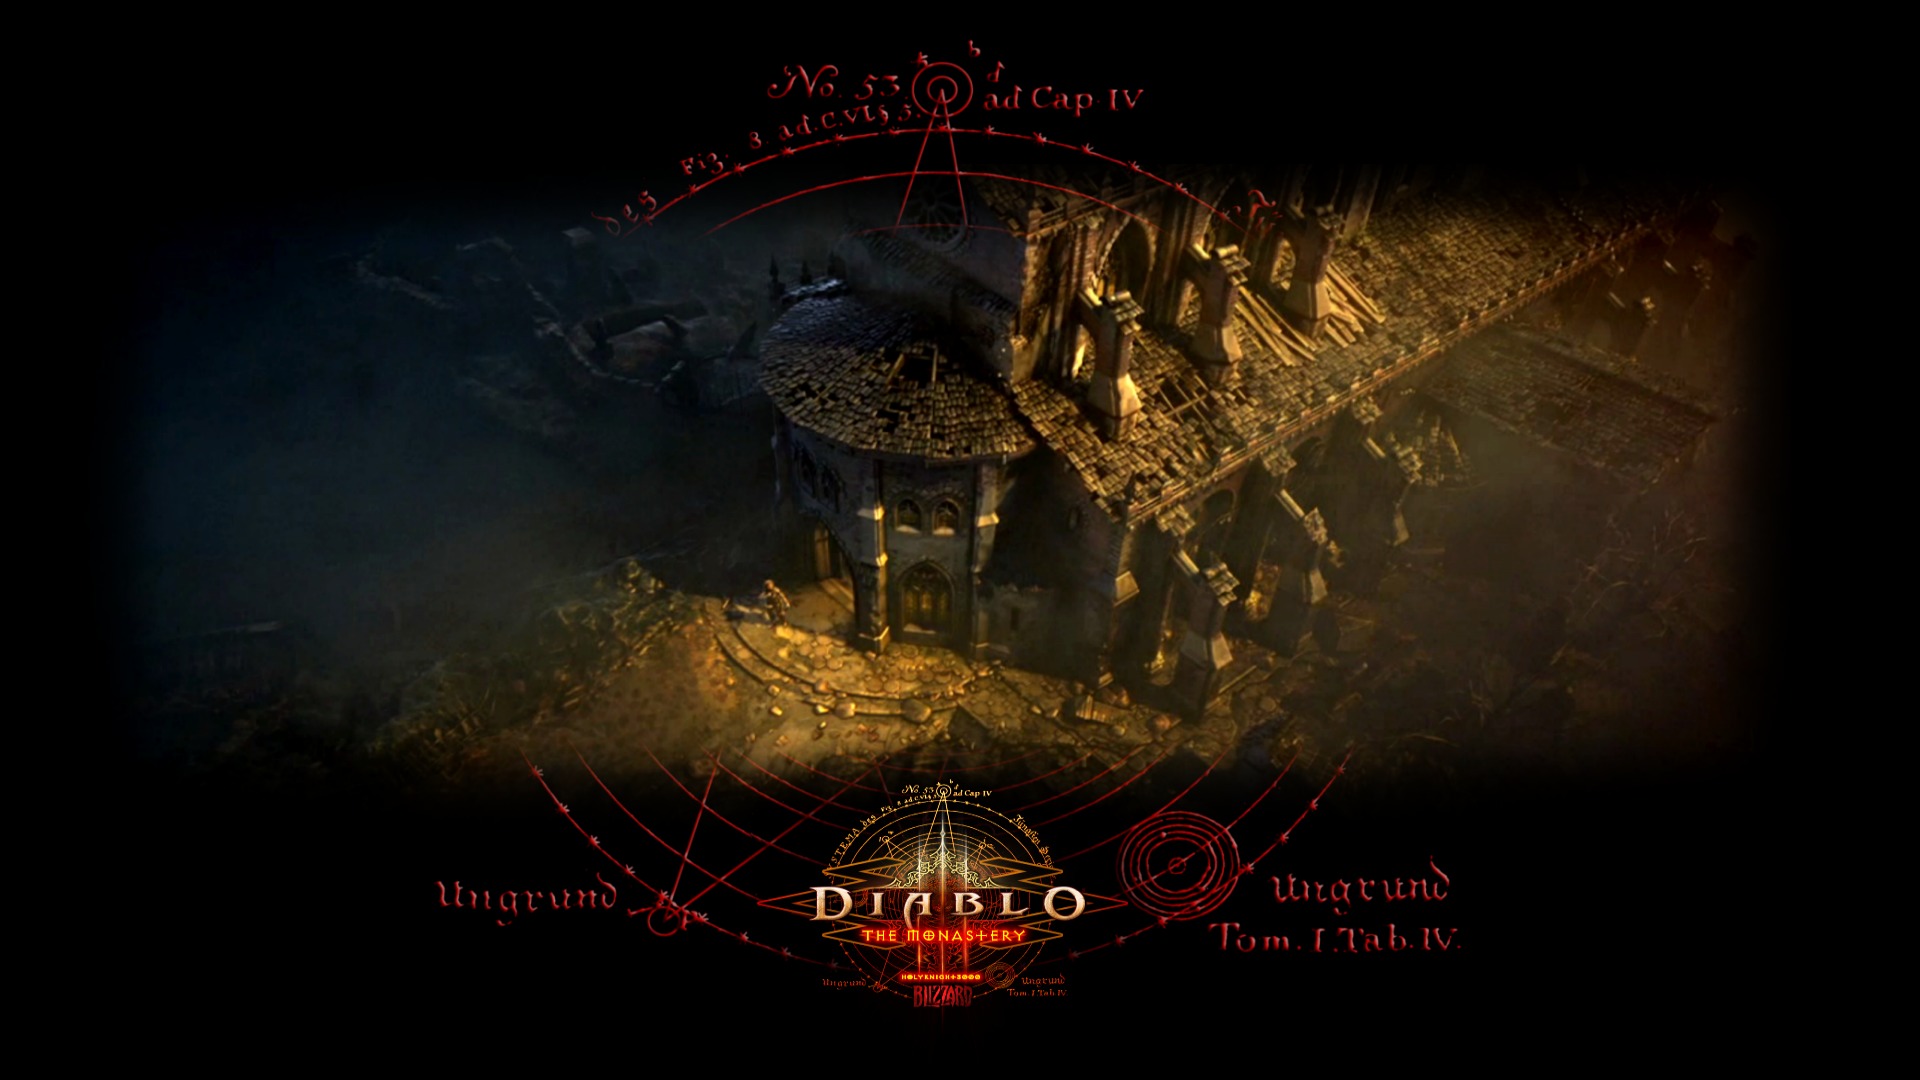 Wallpaper Diablo Game Blizzard Games